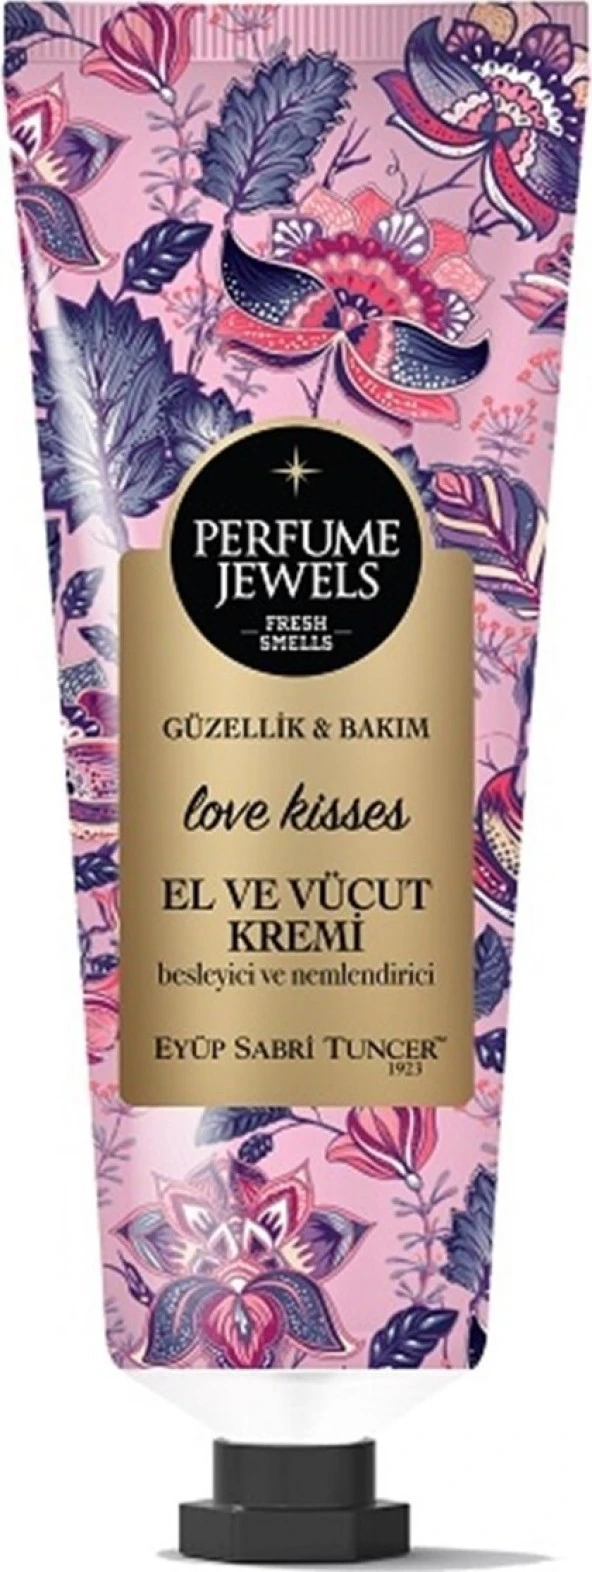 Eyüp Sabri Tuncer Perfume Jewels Love Kisses El Kremi 50ML x 2